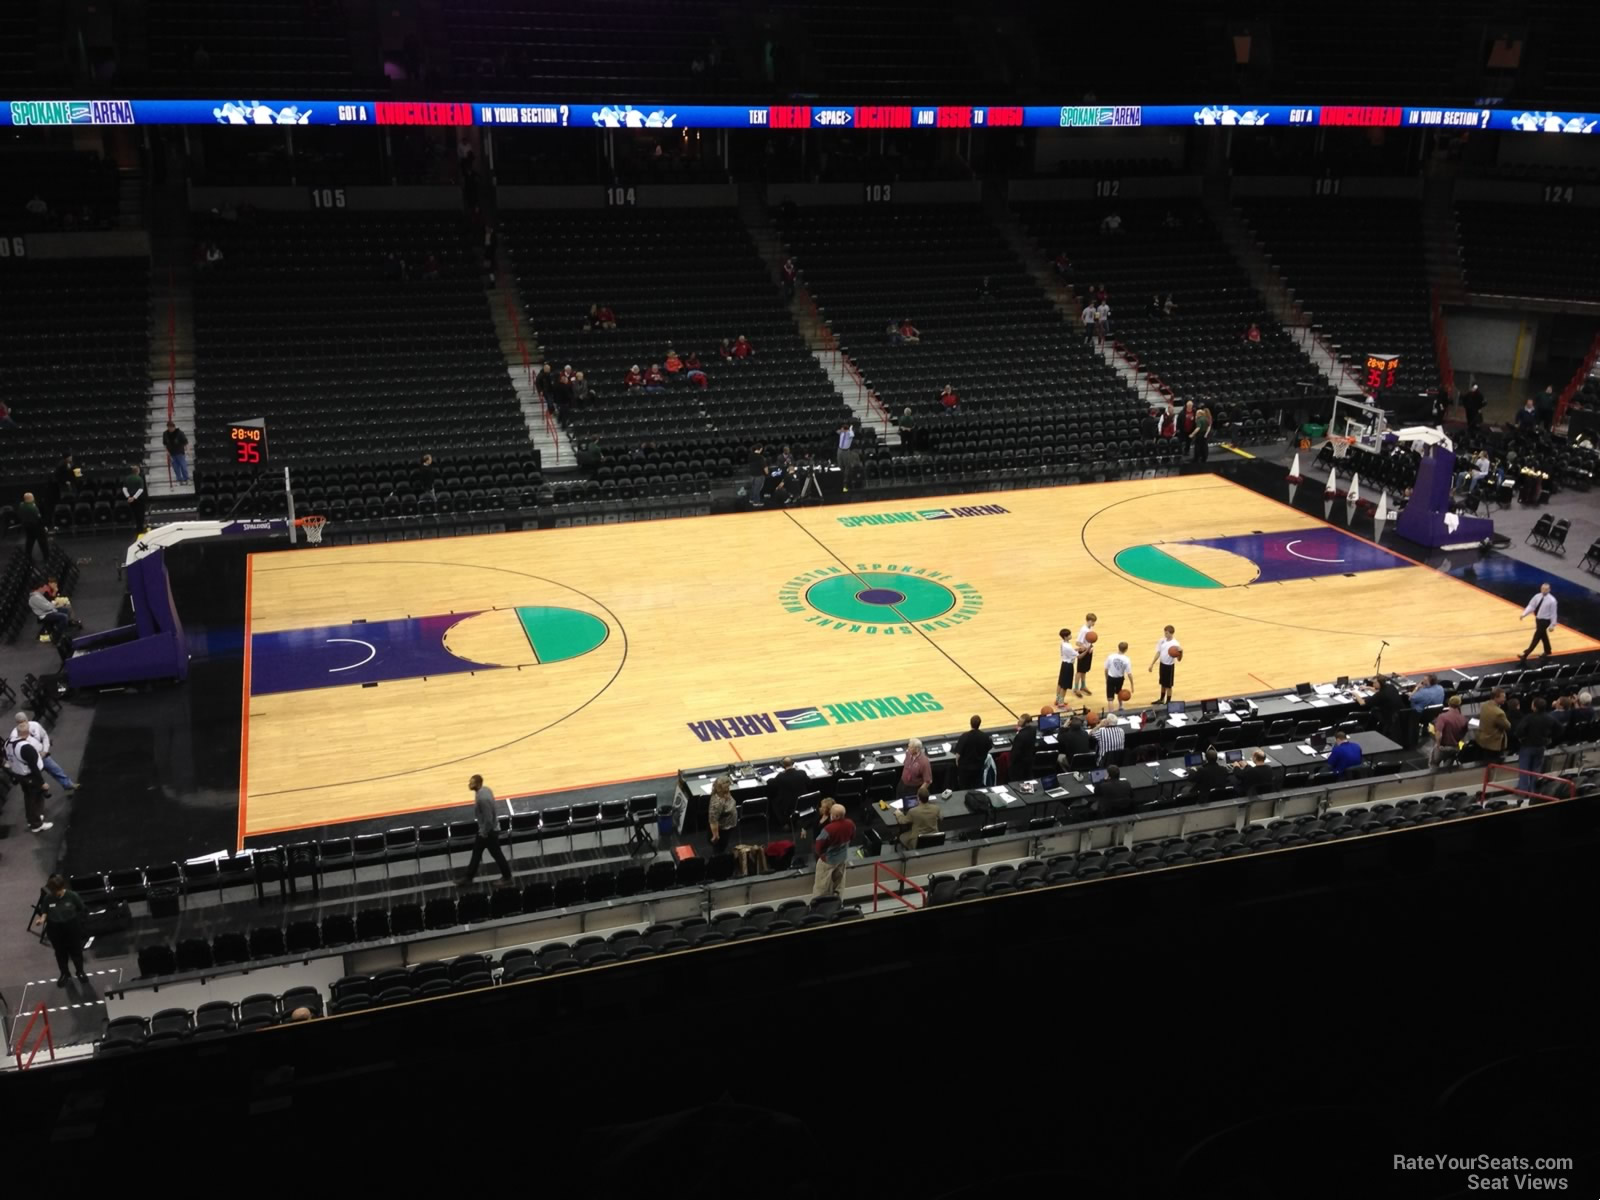 section 215, row c seat view  for basketball - spokane arena